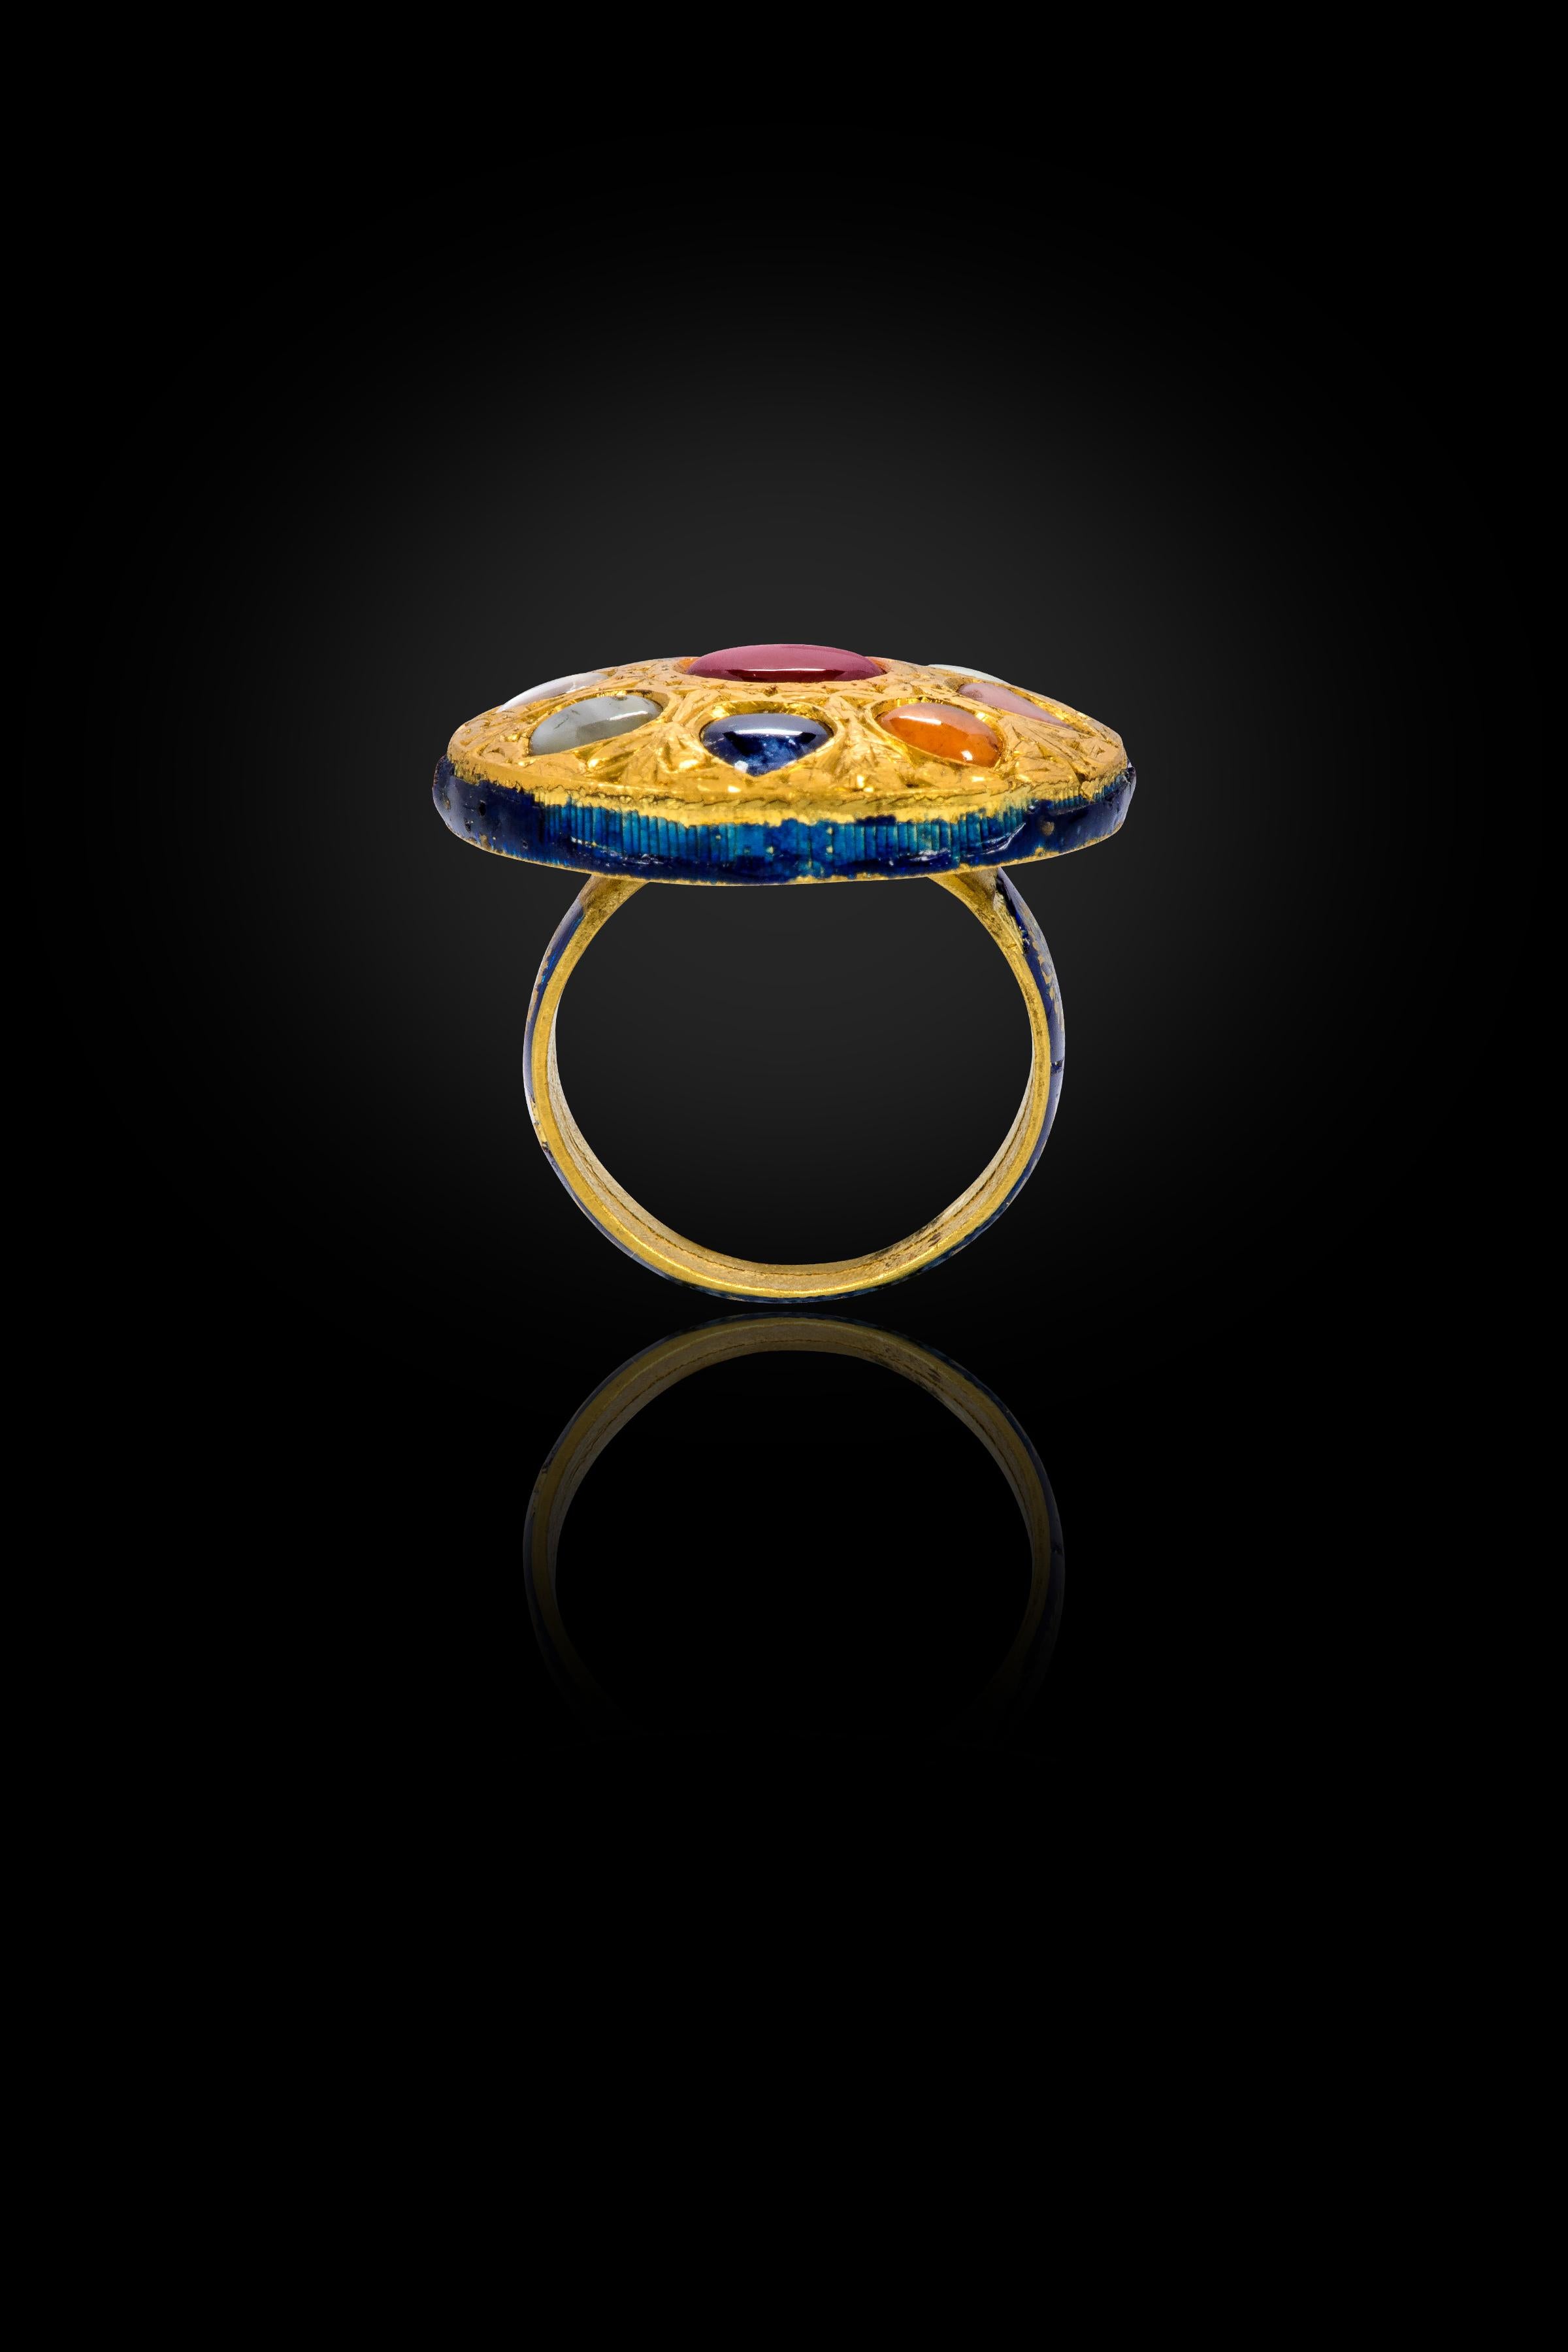 22 Karat Gold Nine Precious Gems Cocktail Ring with Blue Enamel Work 1